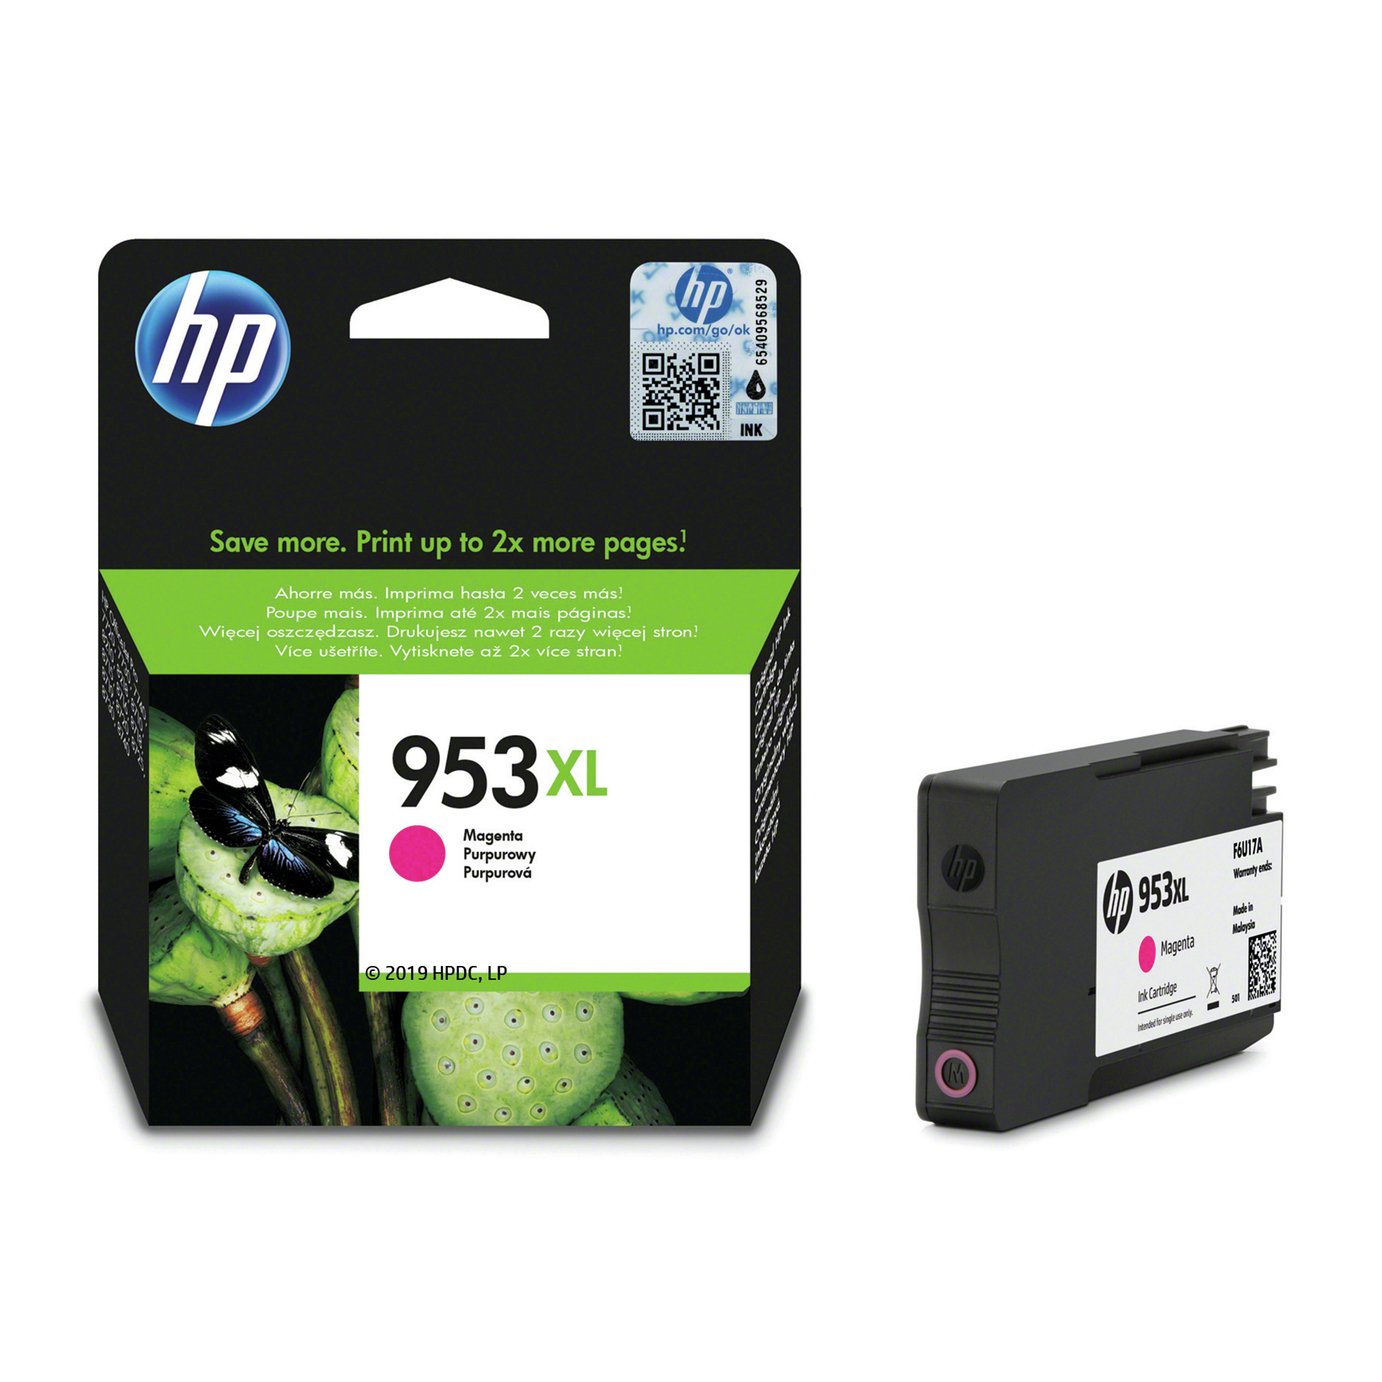 HP 953XL High-Yield Original Ink Cartridge Review